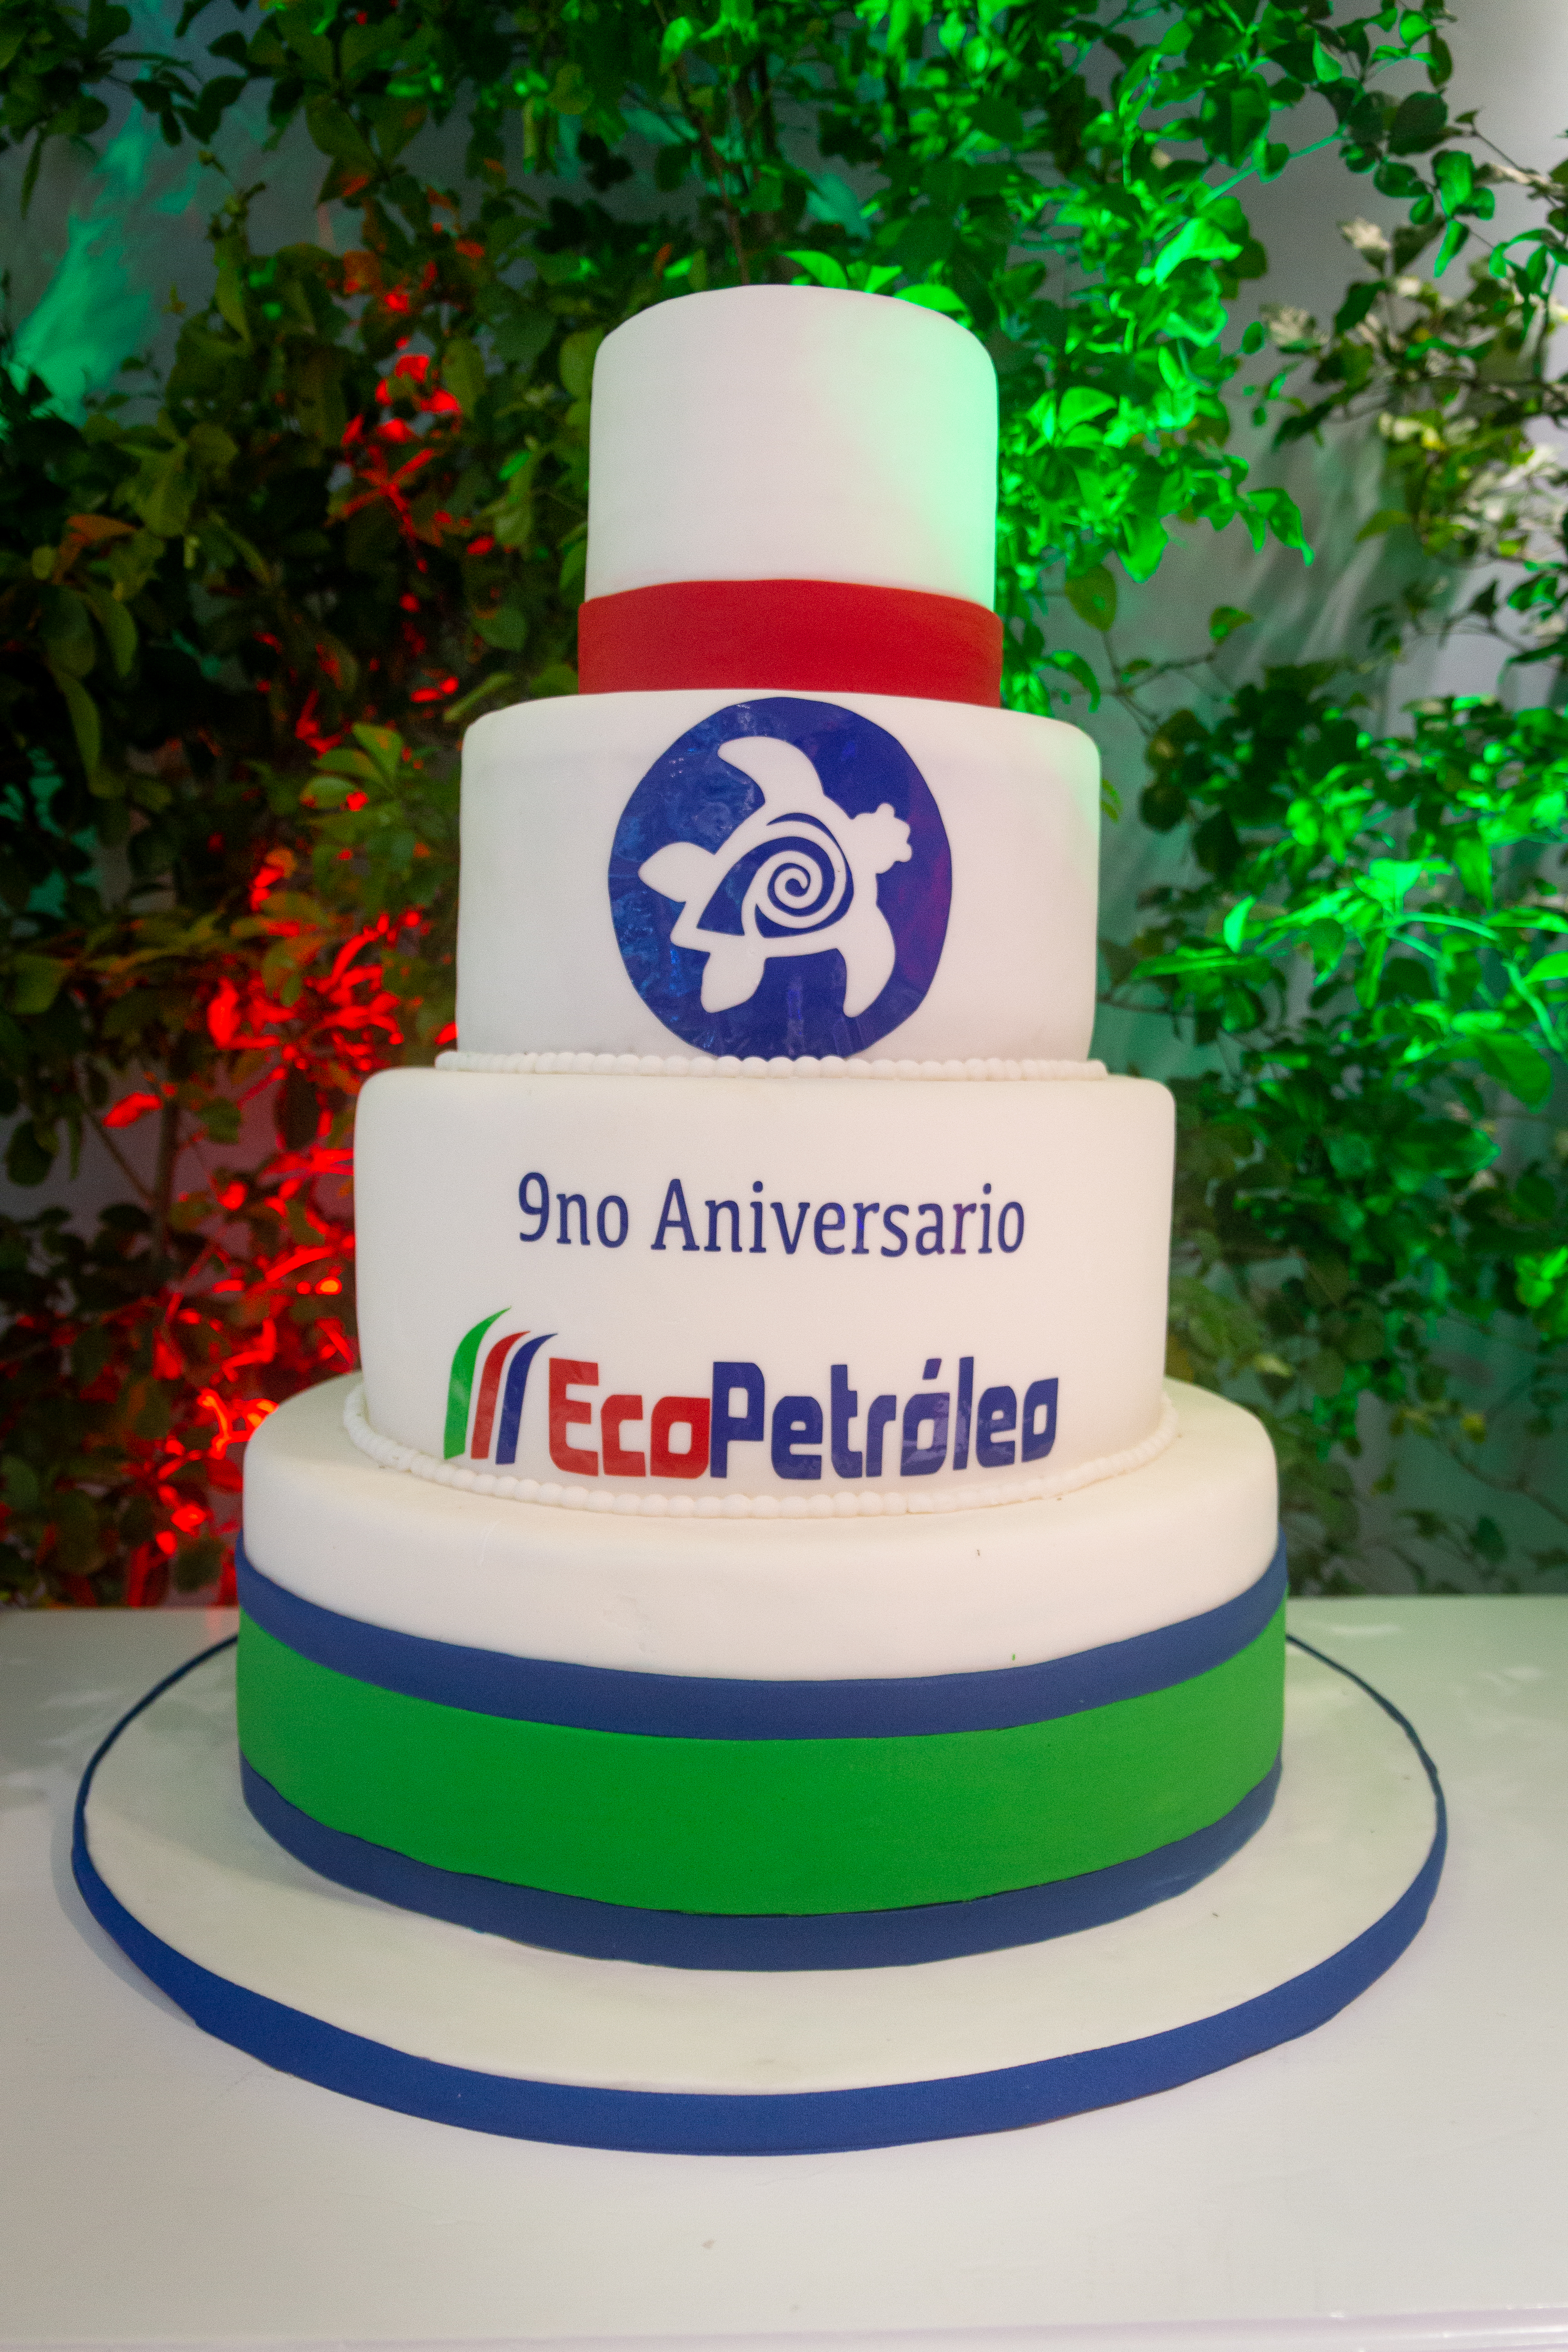 9no Aniversario Ecopetroleo